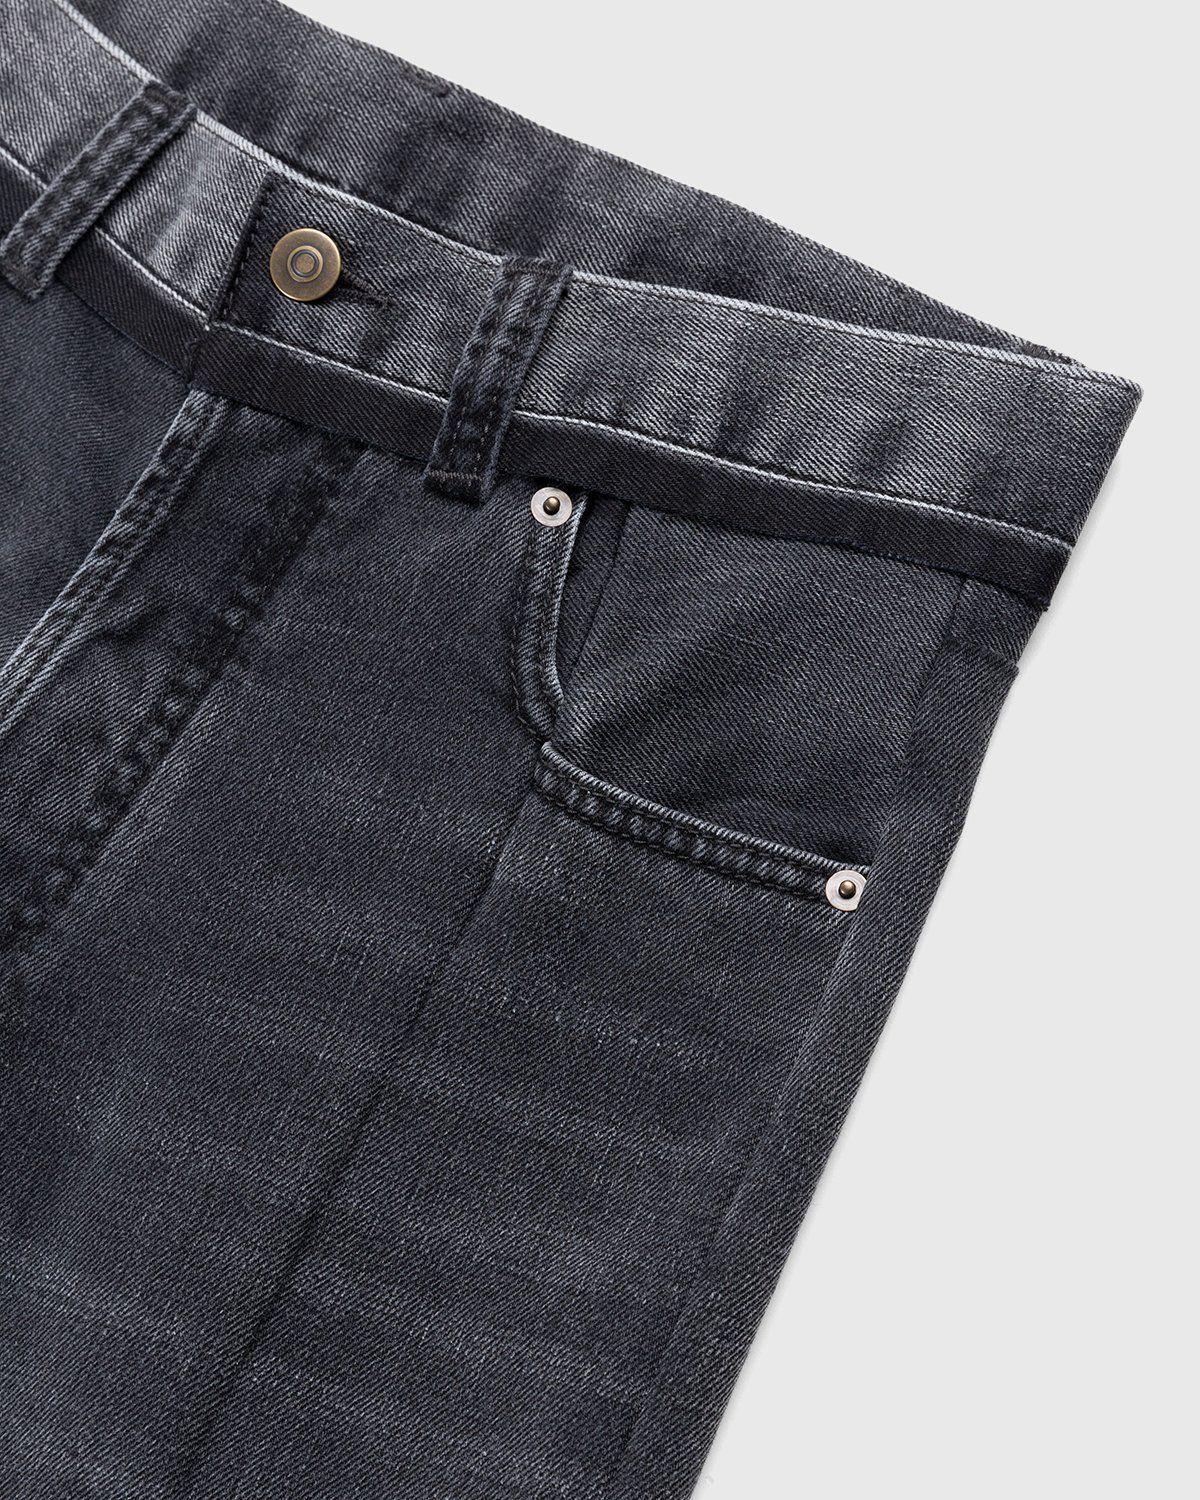 Maison Margiela – Spliced Jeans Black - Denim - Black - Image 3